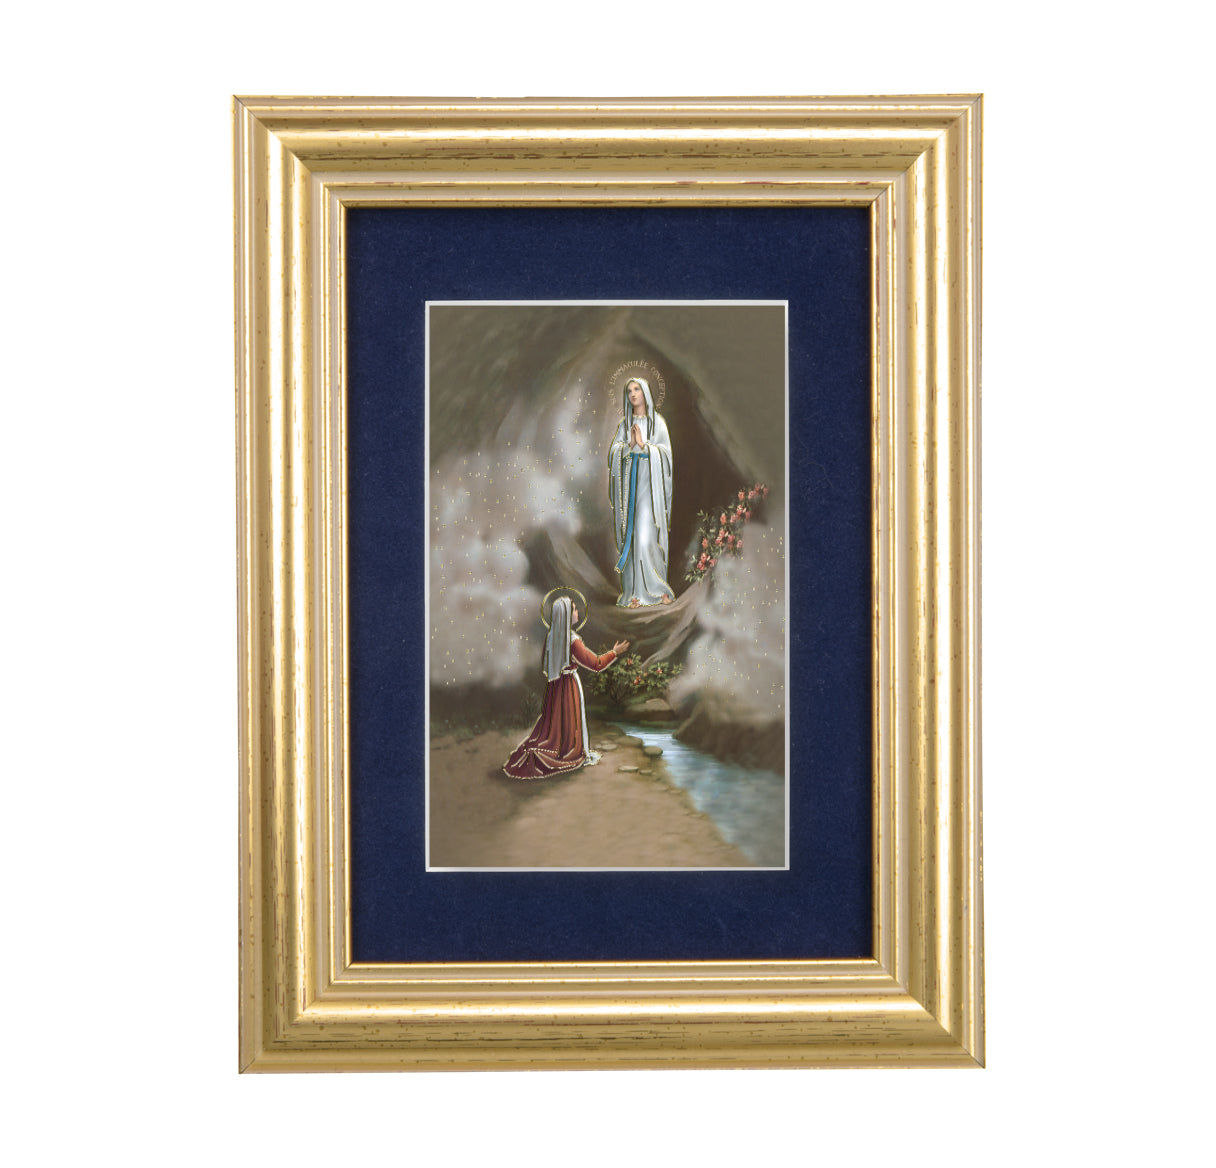 Our Lady of Lourdes Gold Framed Art with Blue Velvet Matting